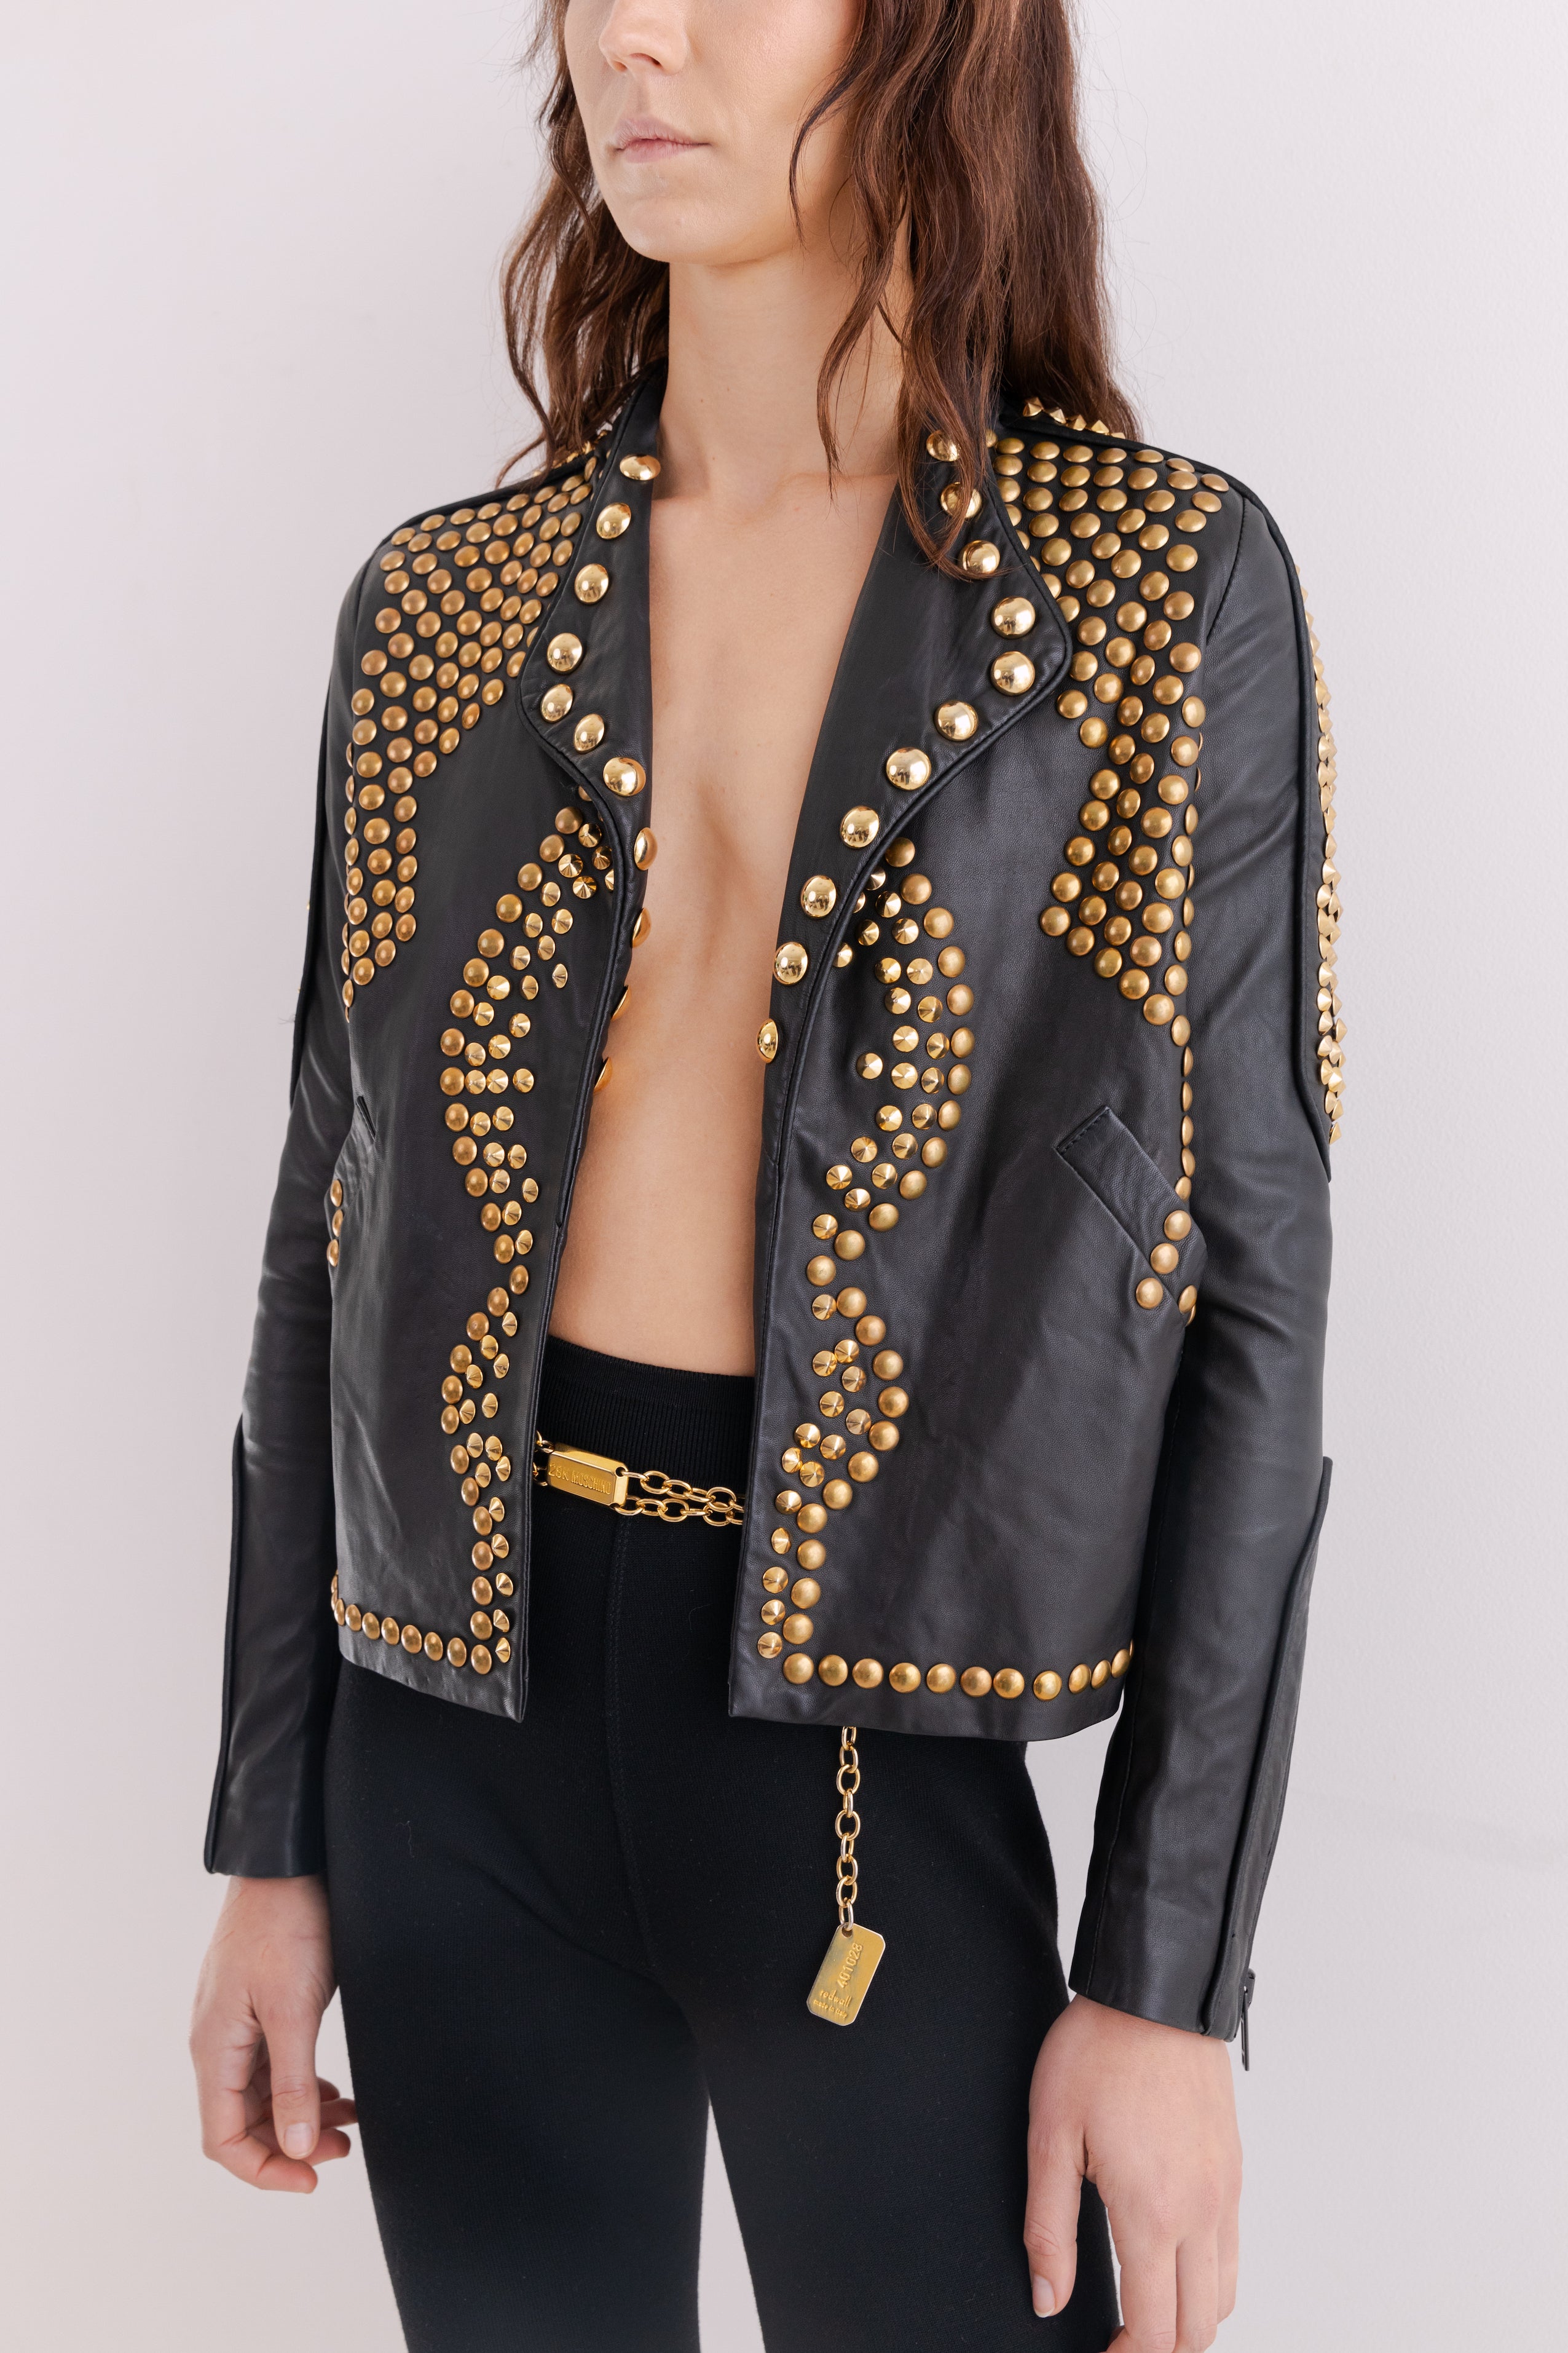 Givenchy <br> Resort 2010 studded leather jacket